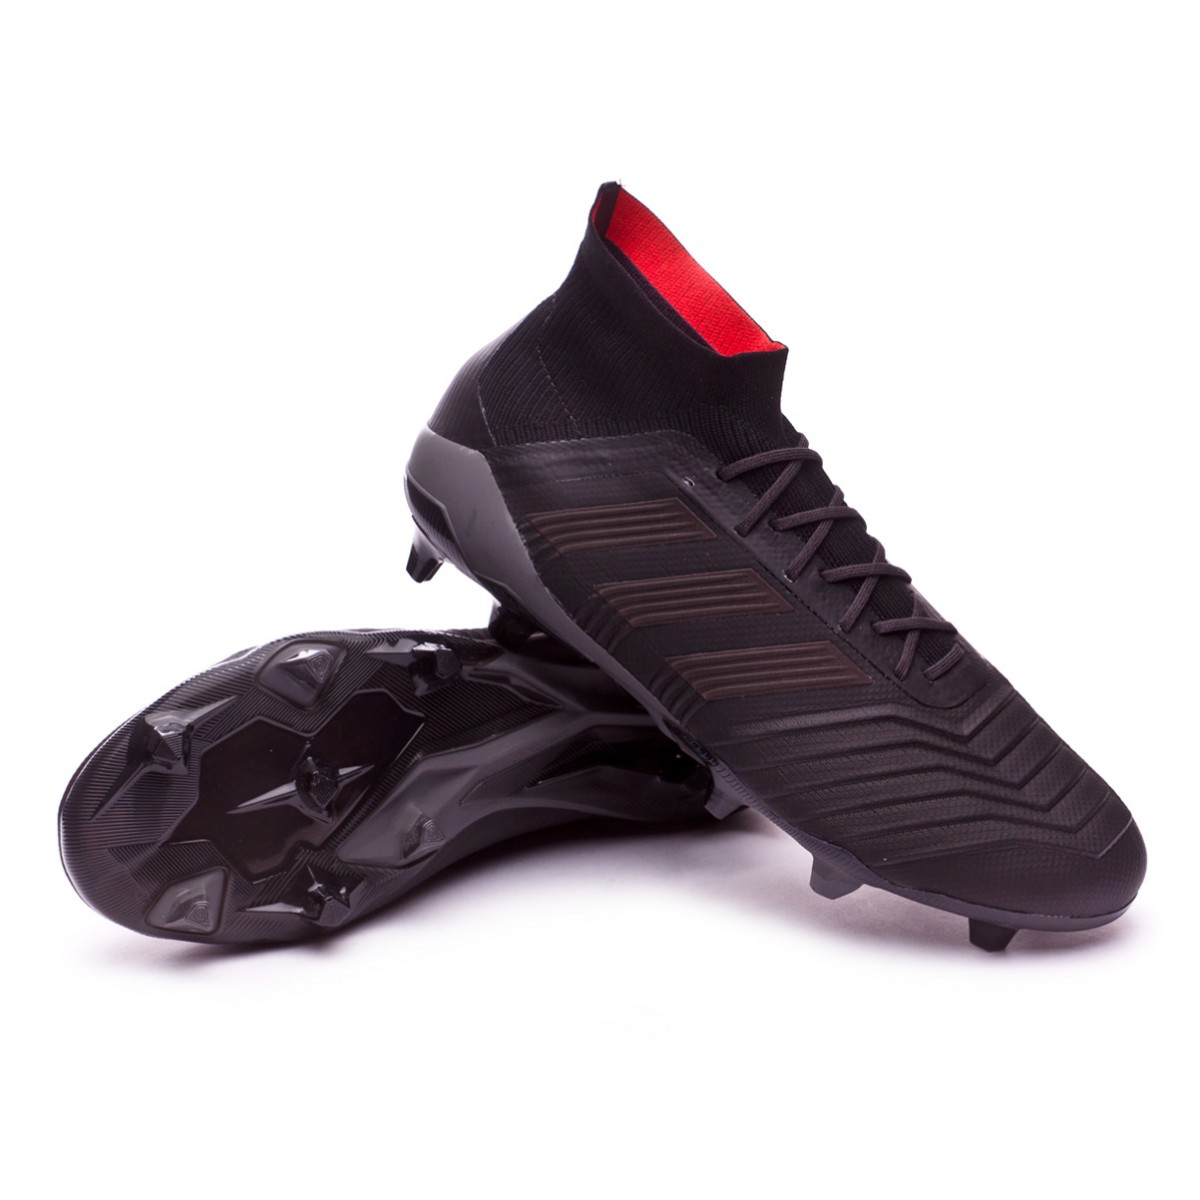 adidas predator 18.1 football boots